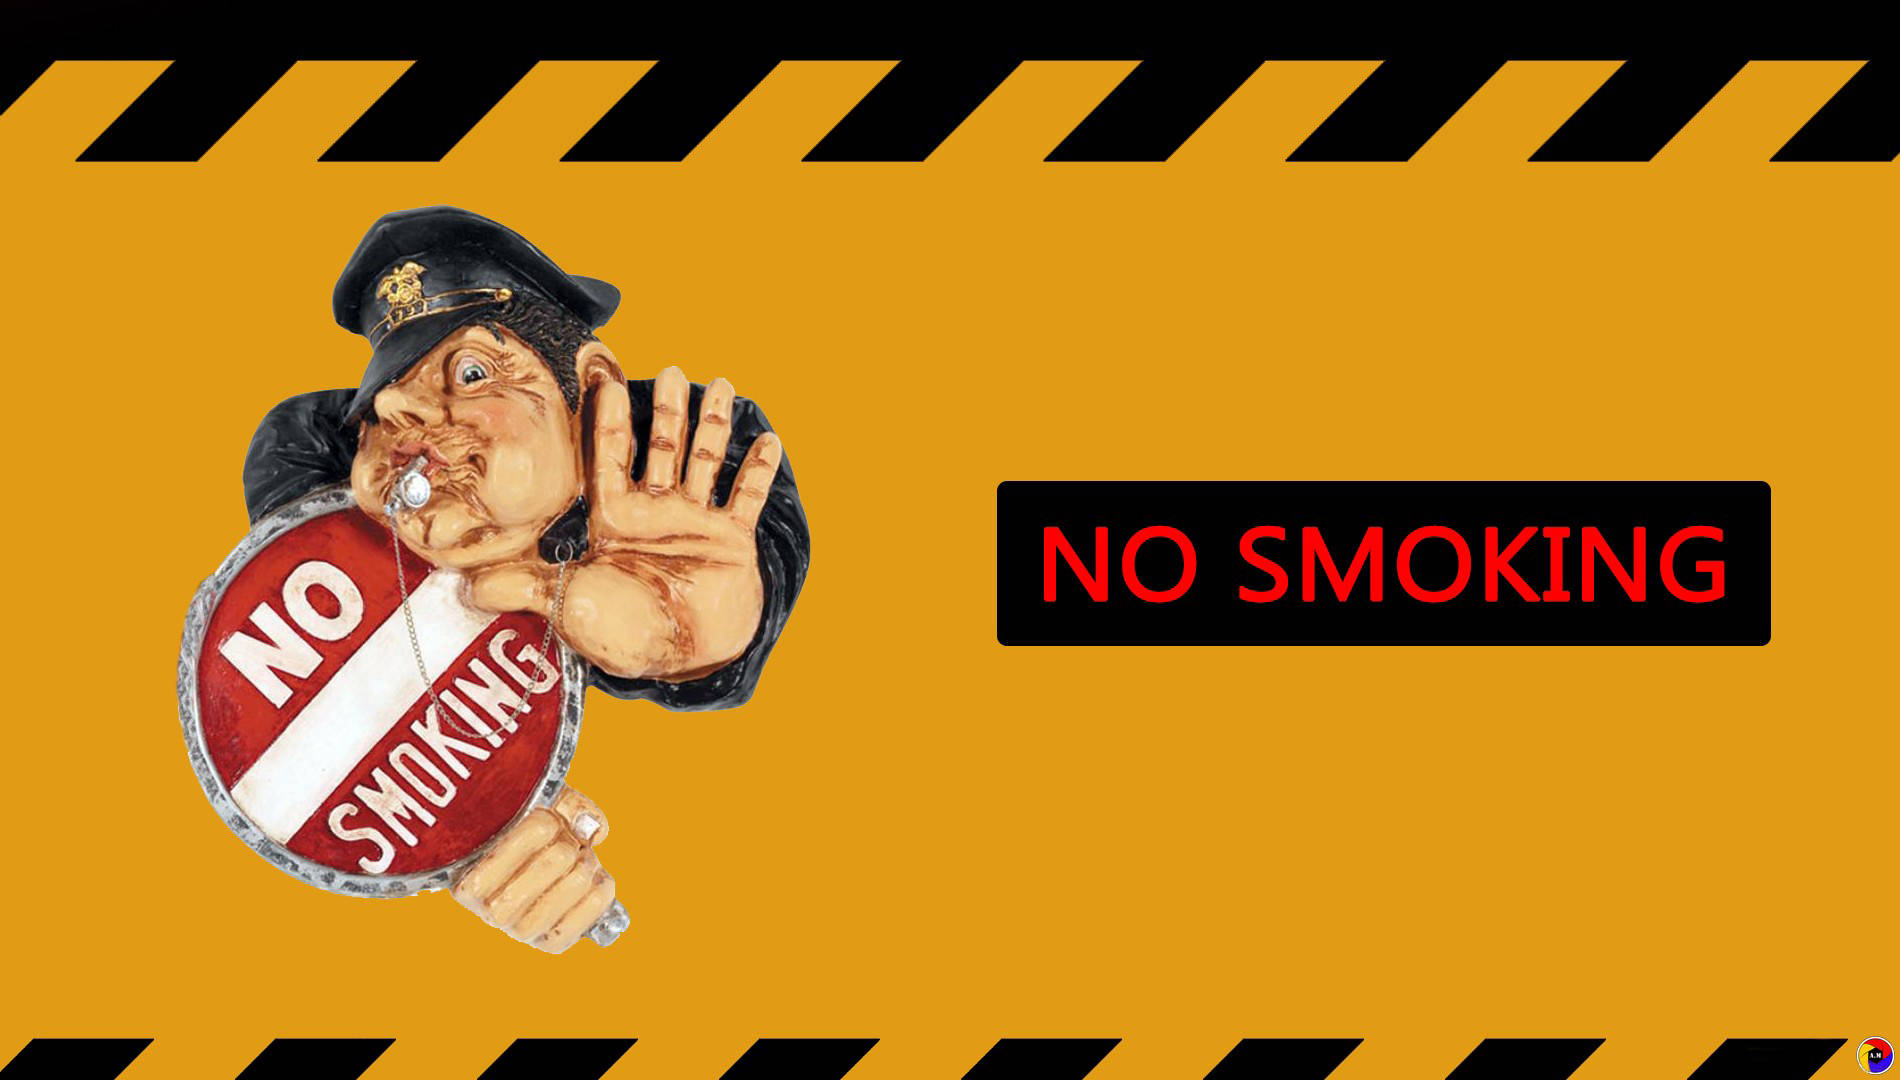 No Smoking Signage